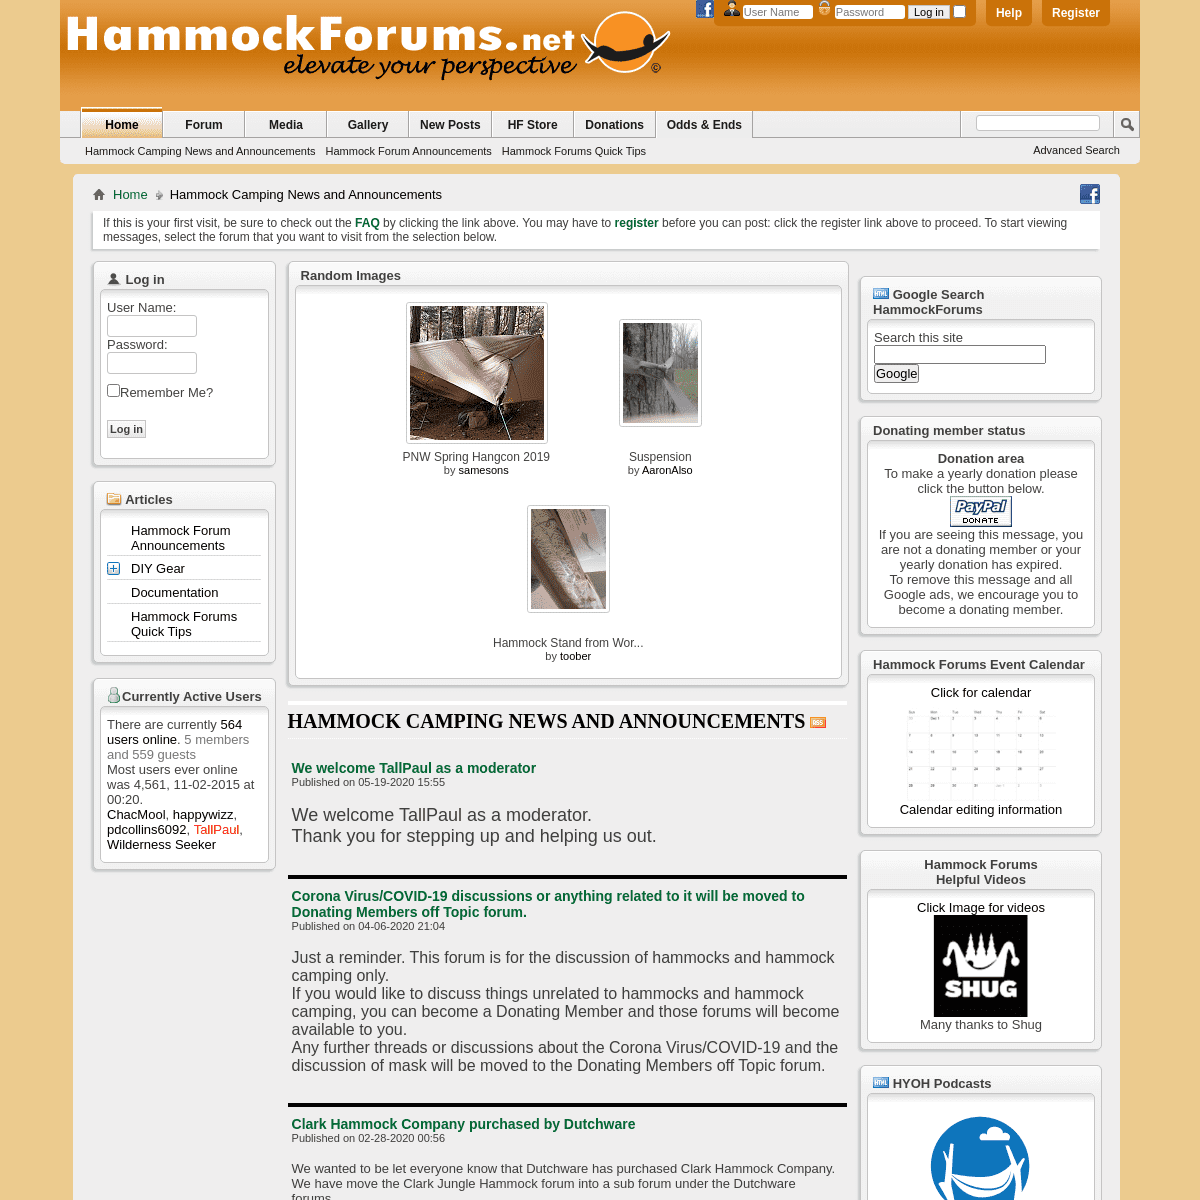 A complete backup of https://hammockforums.net